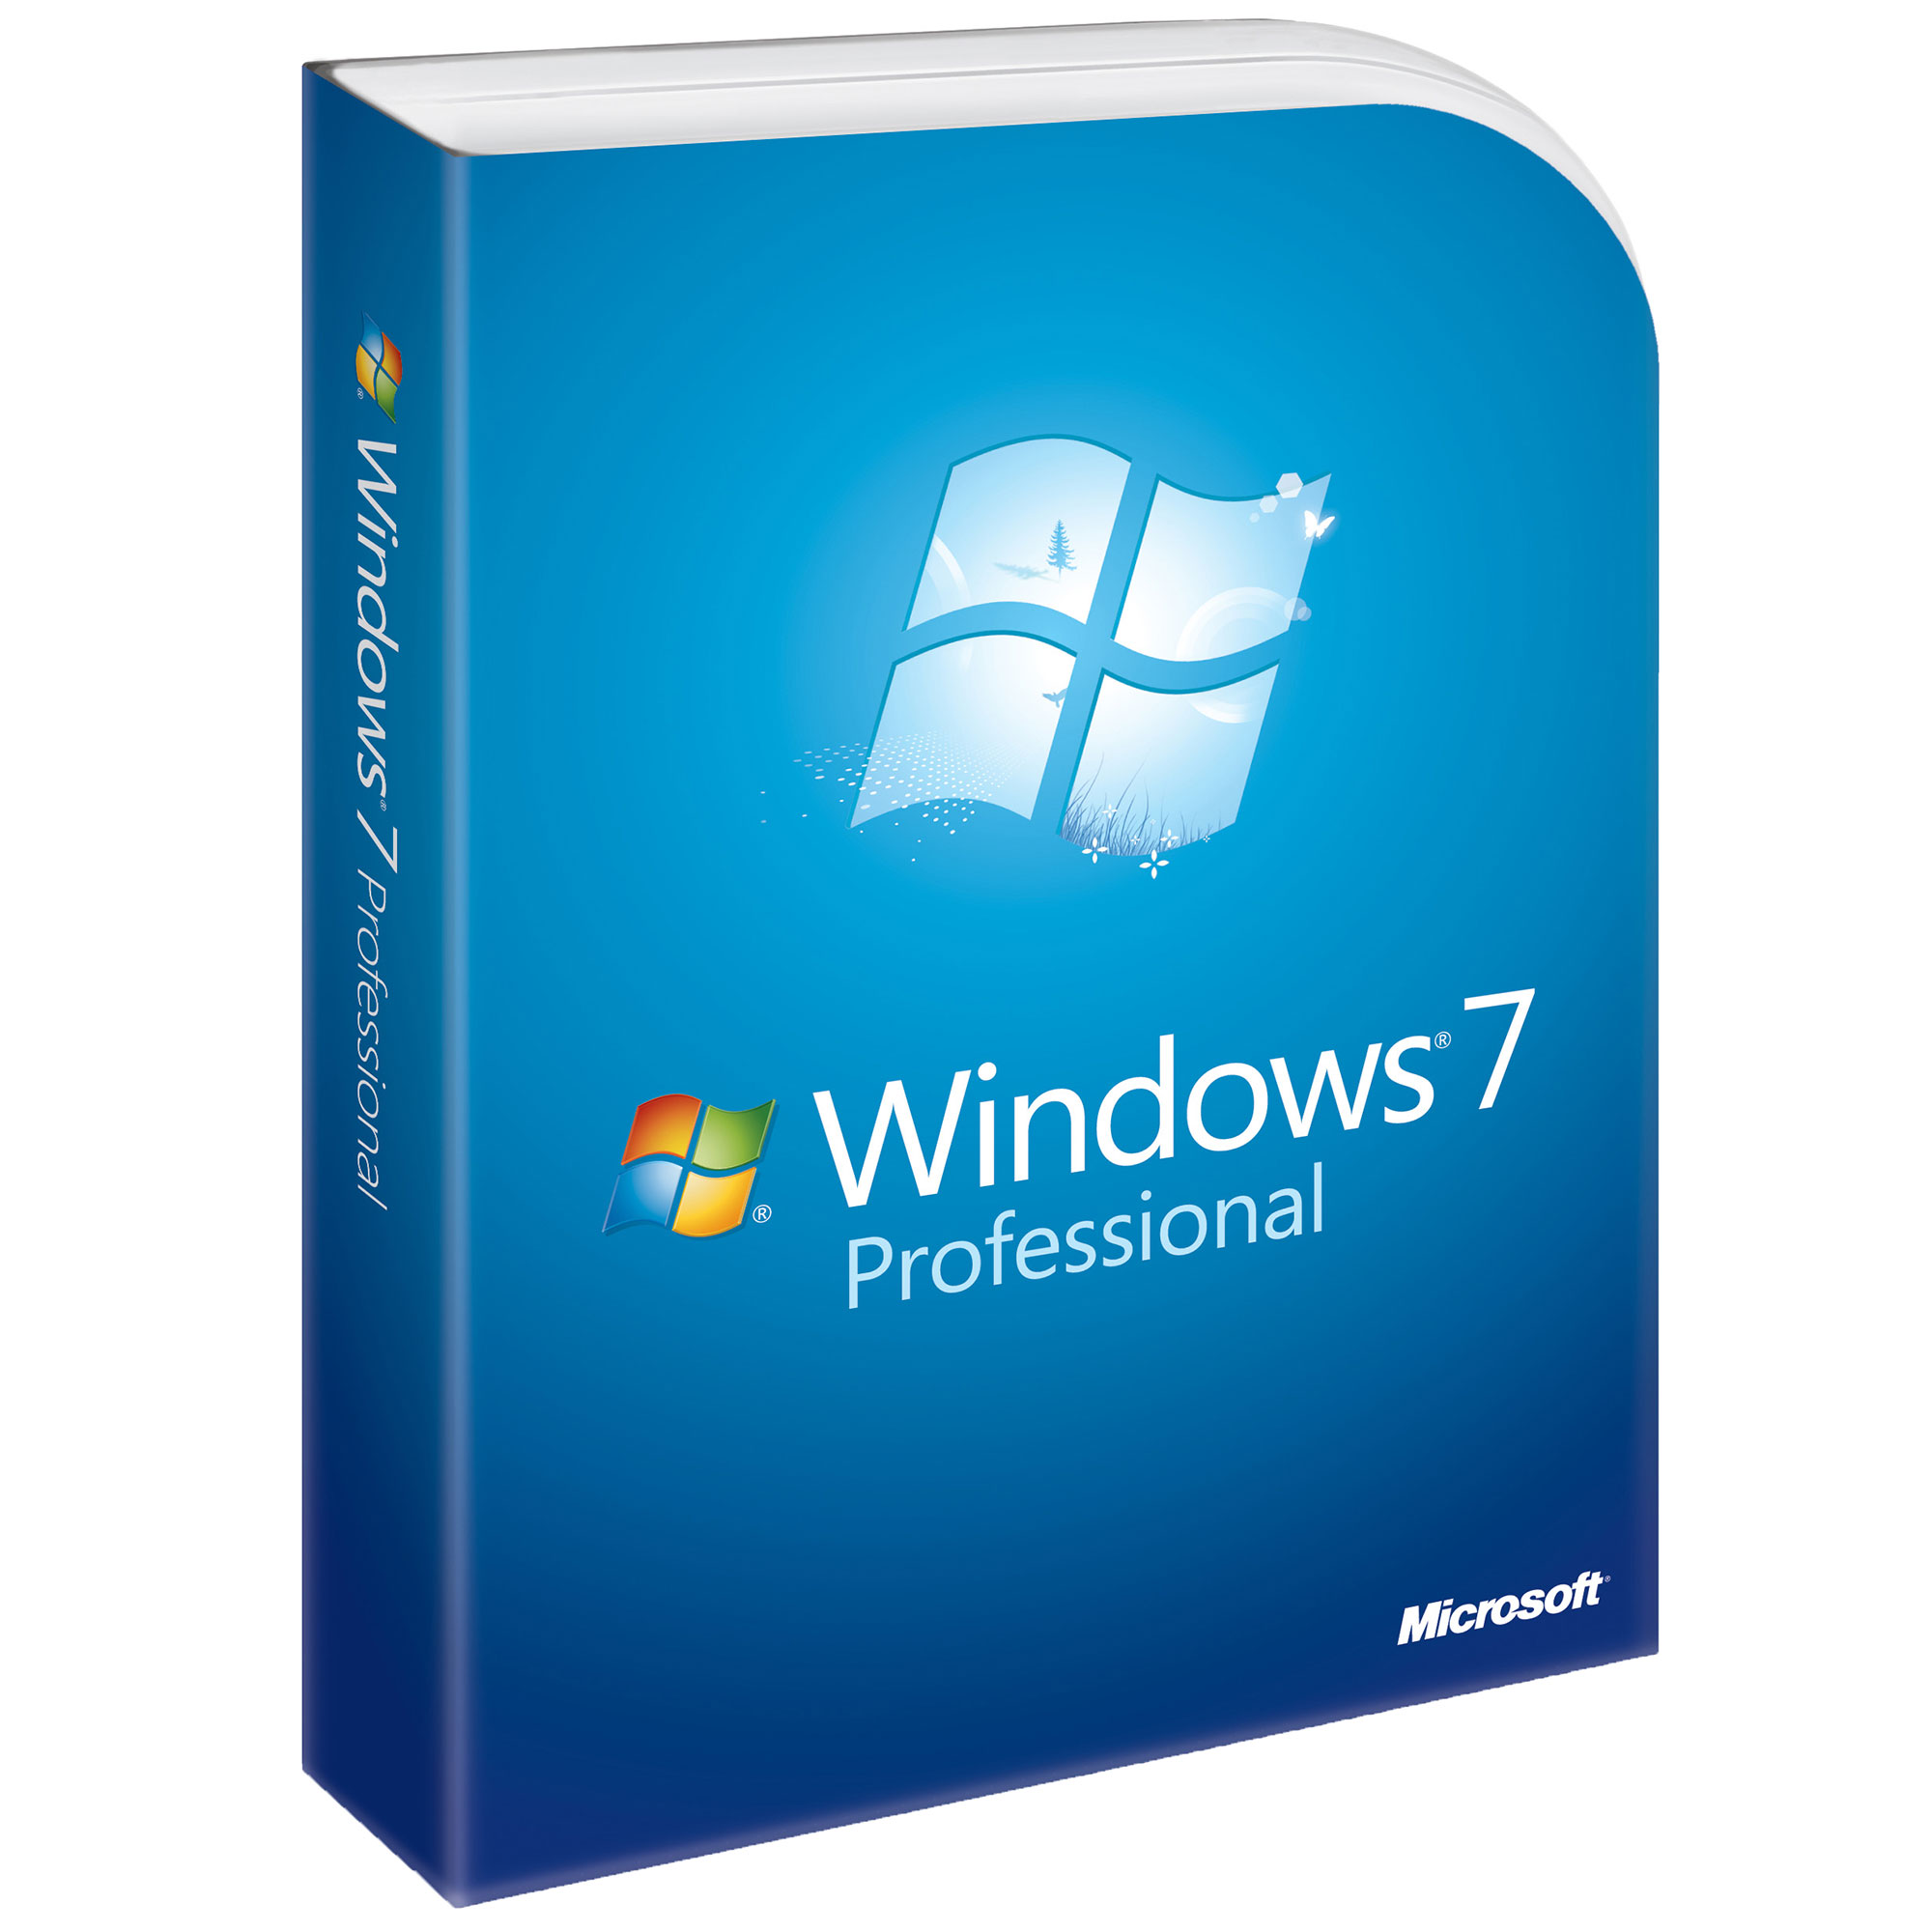  Microsoft Windows 7 Professional English DVD Retail 